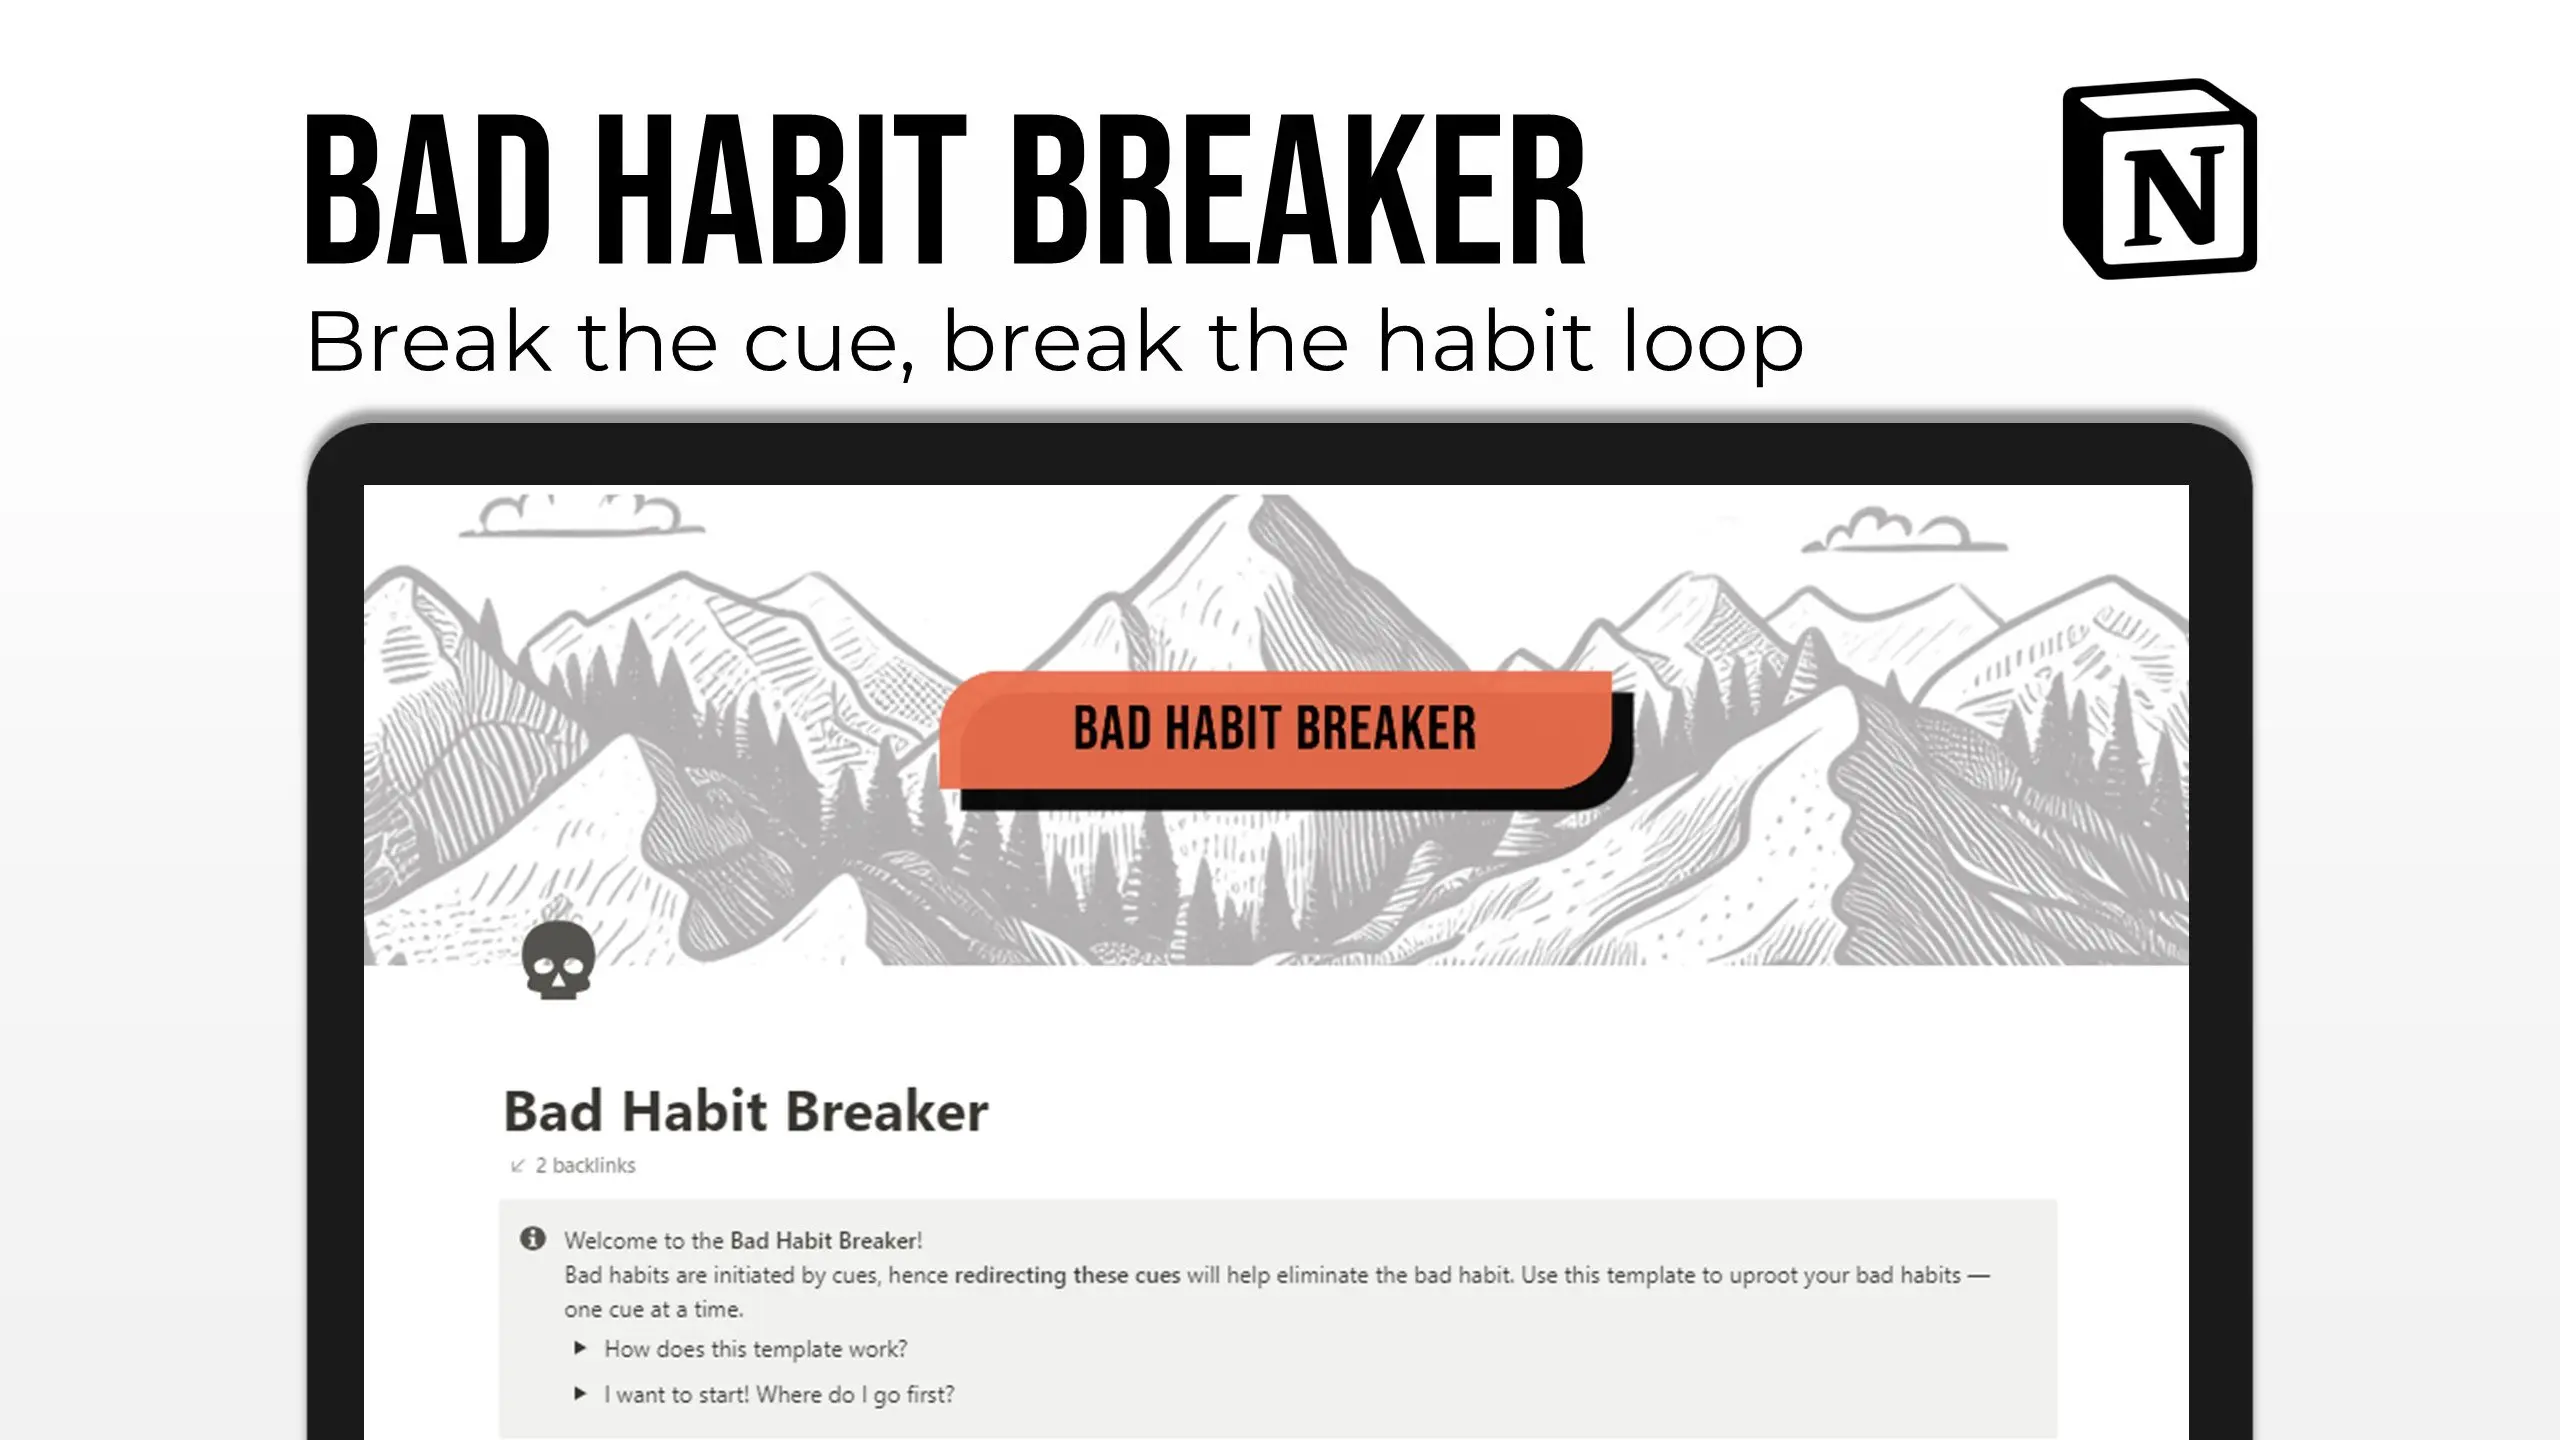 Bad Habit Breaker image